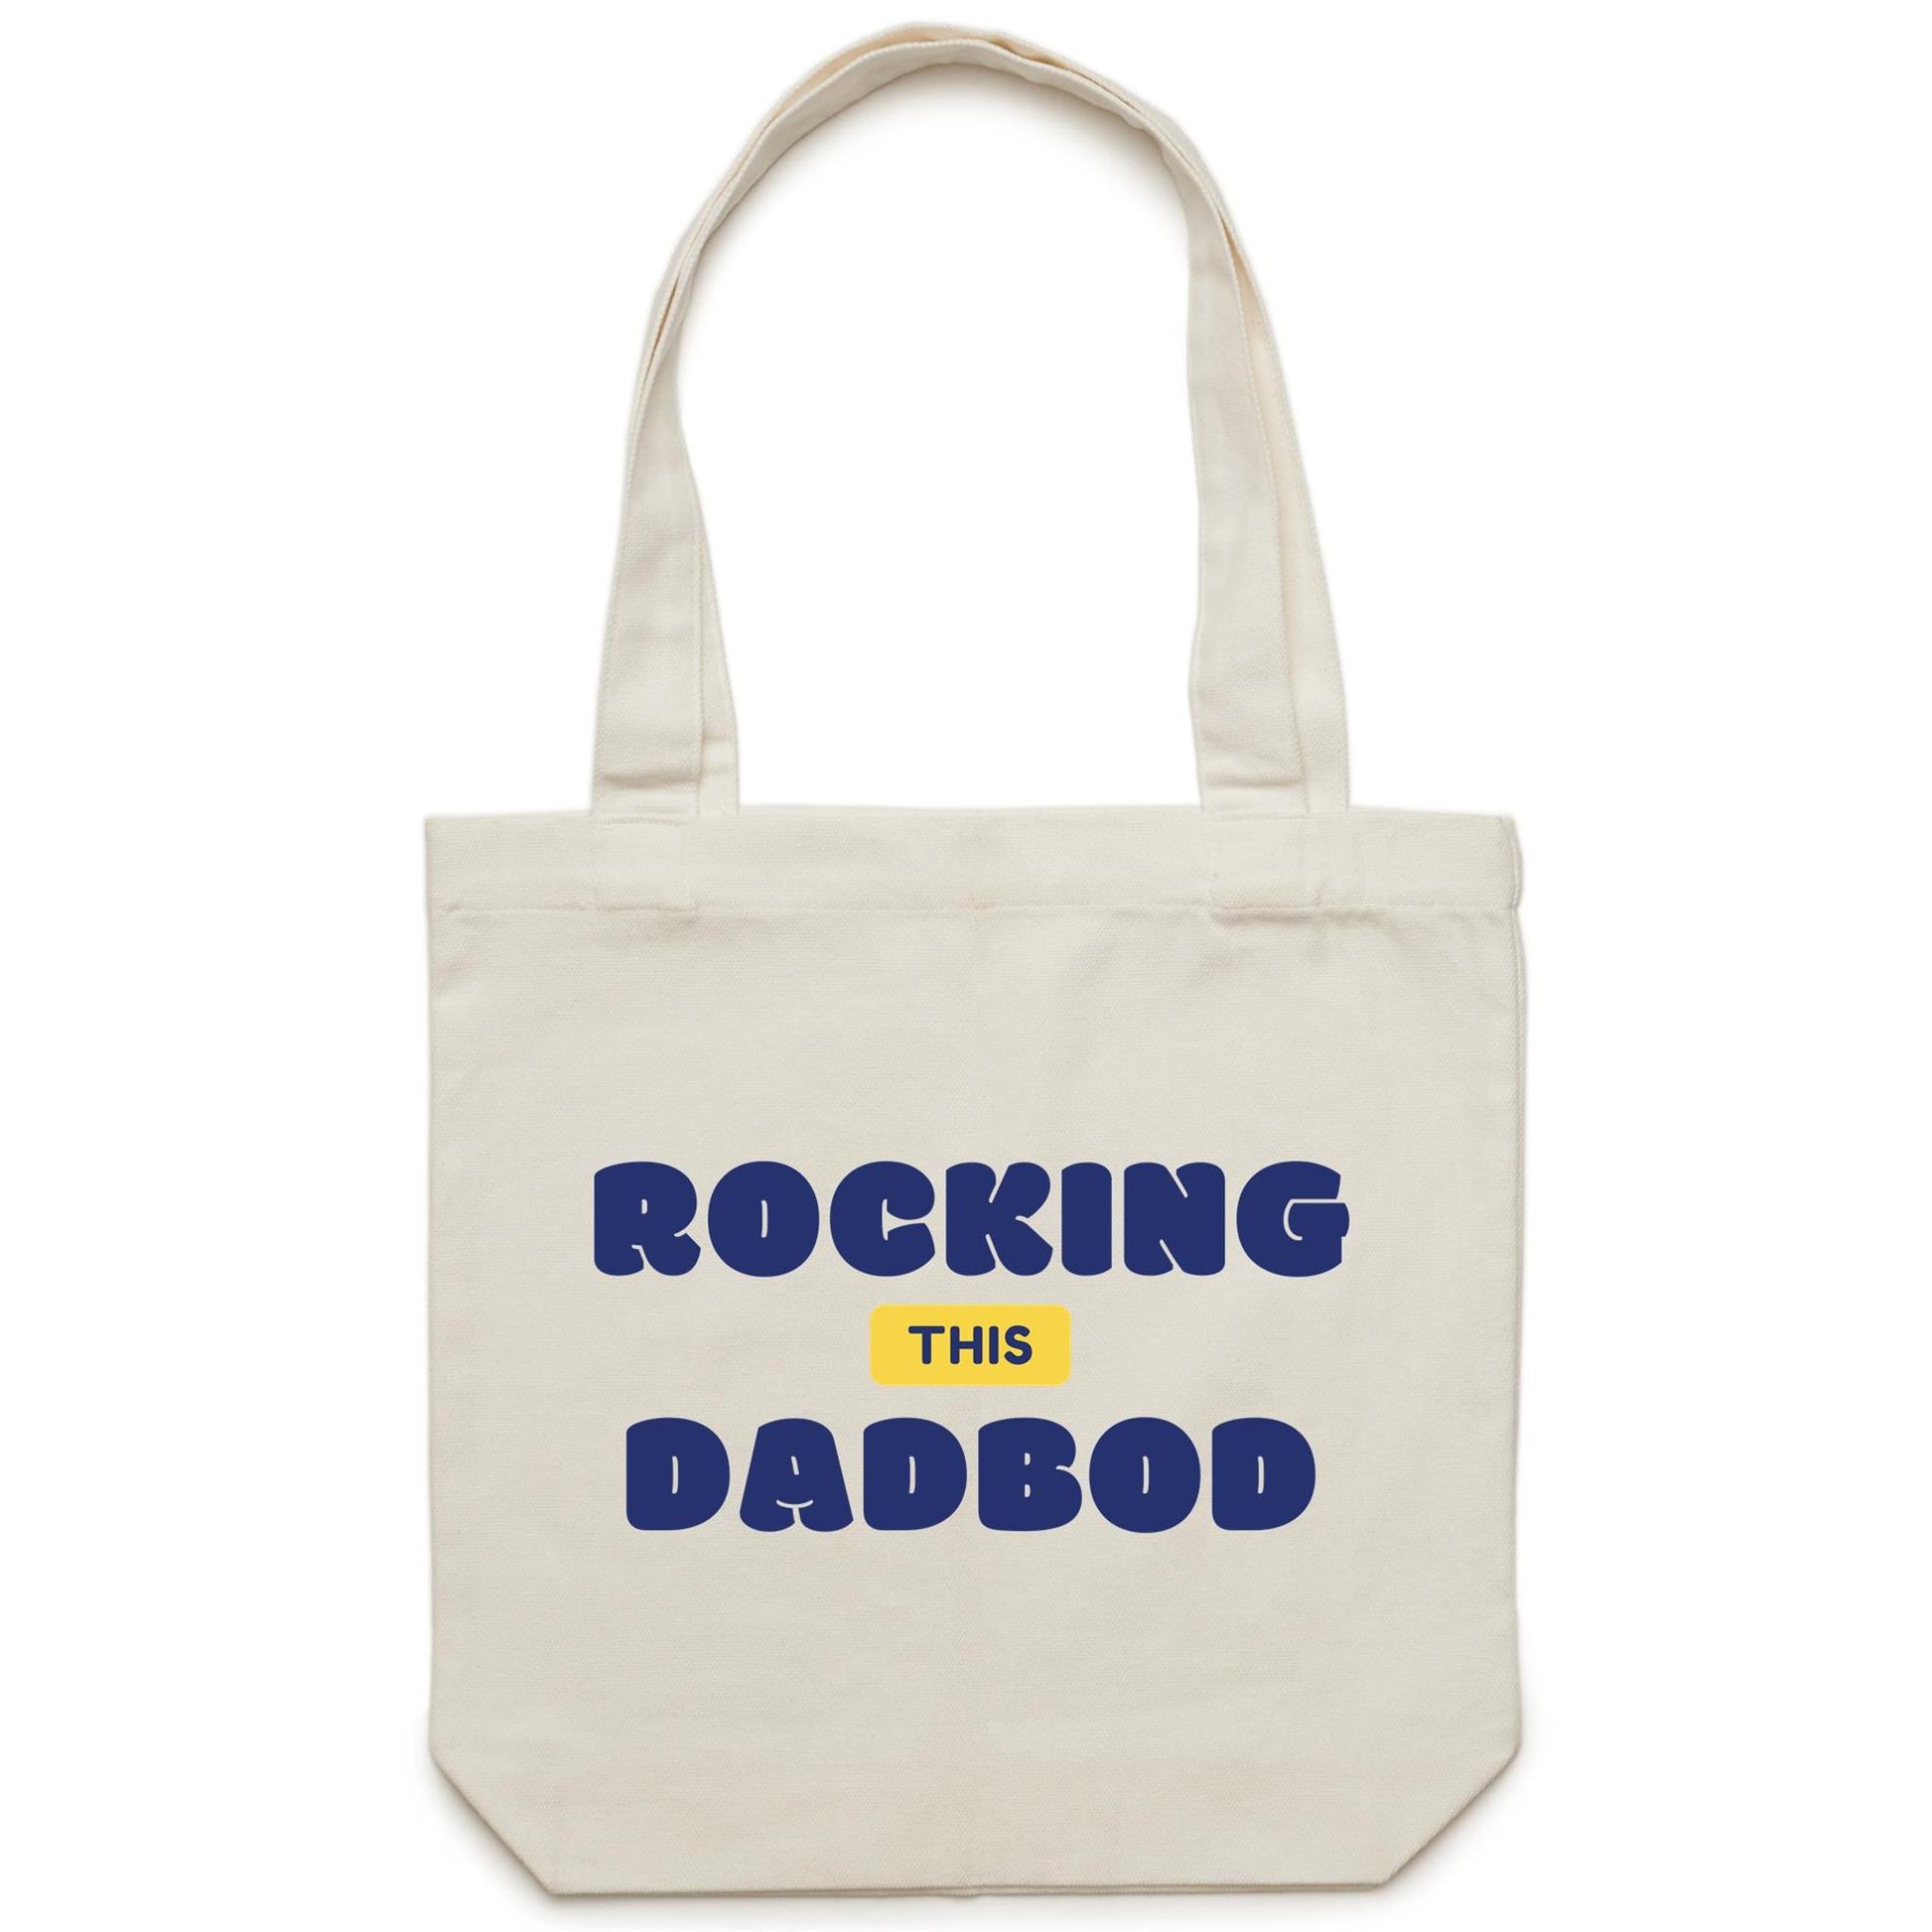 Rocking This DadBod - Canvas Tote Bag Default Title Tote Bag Dad